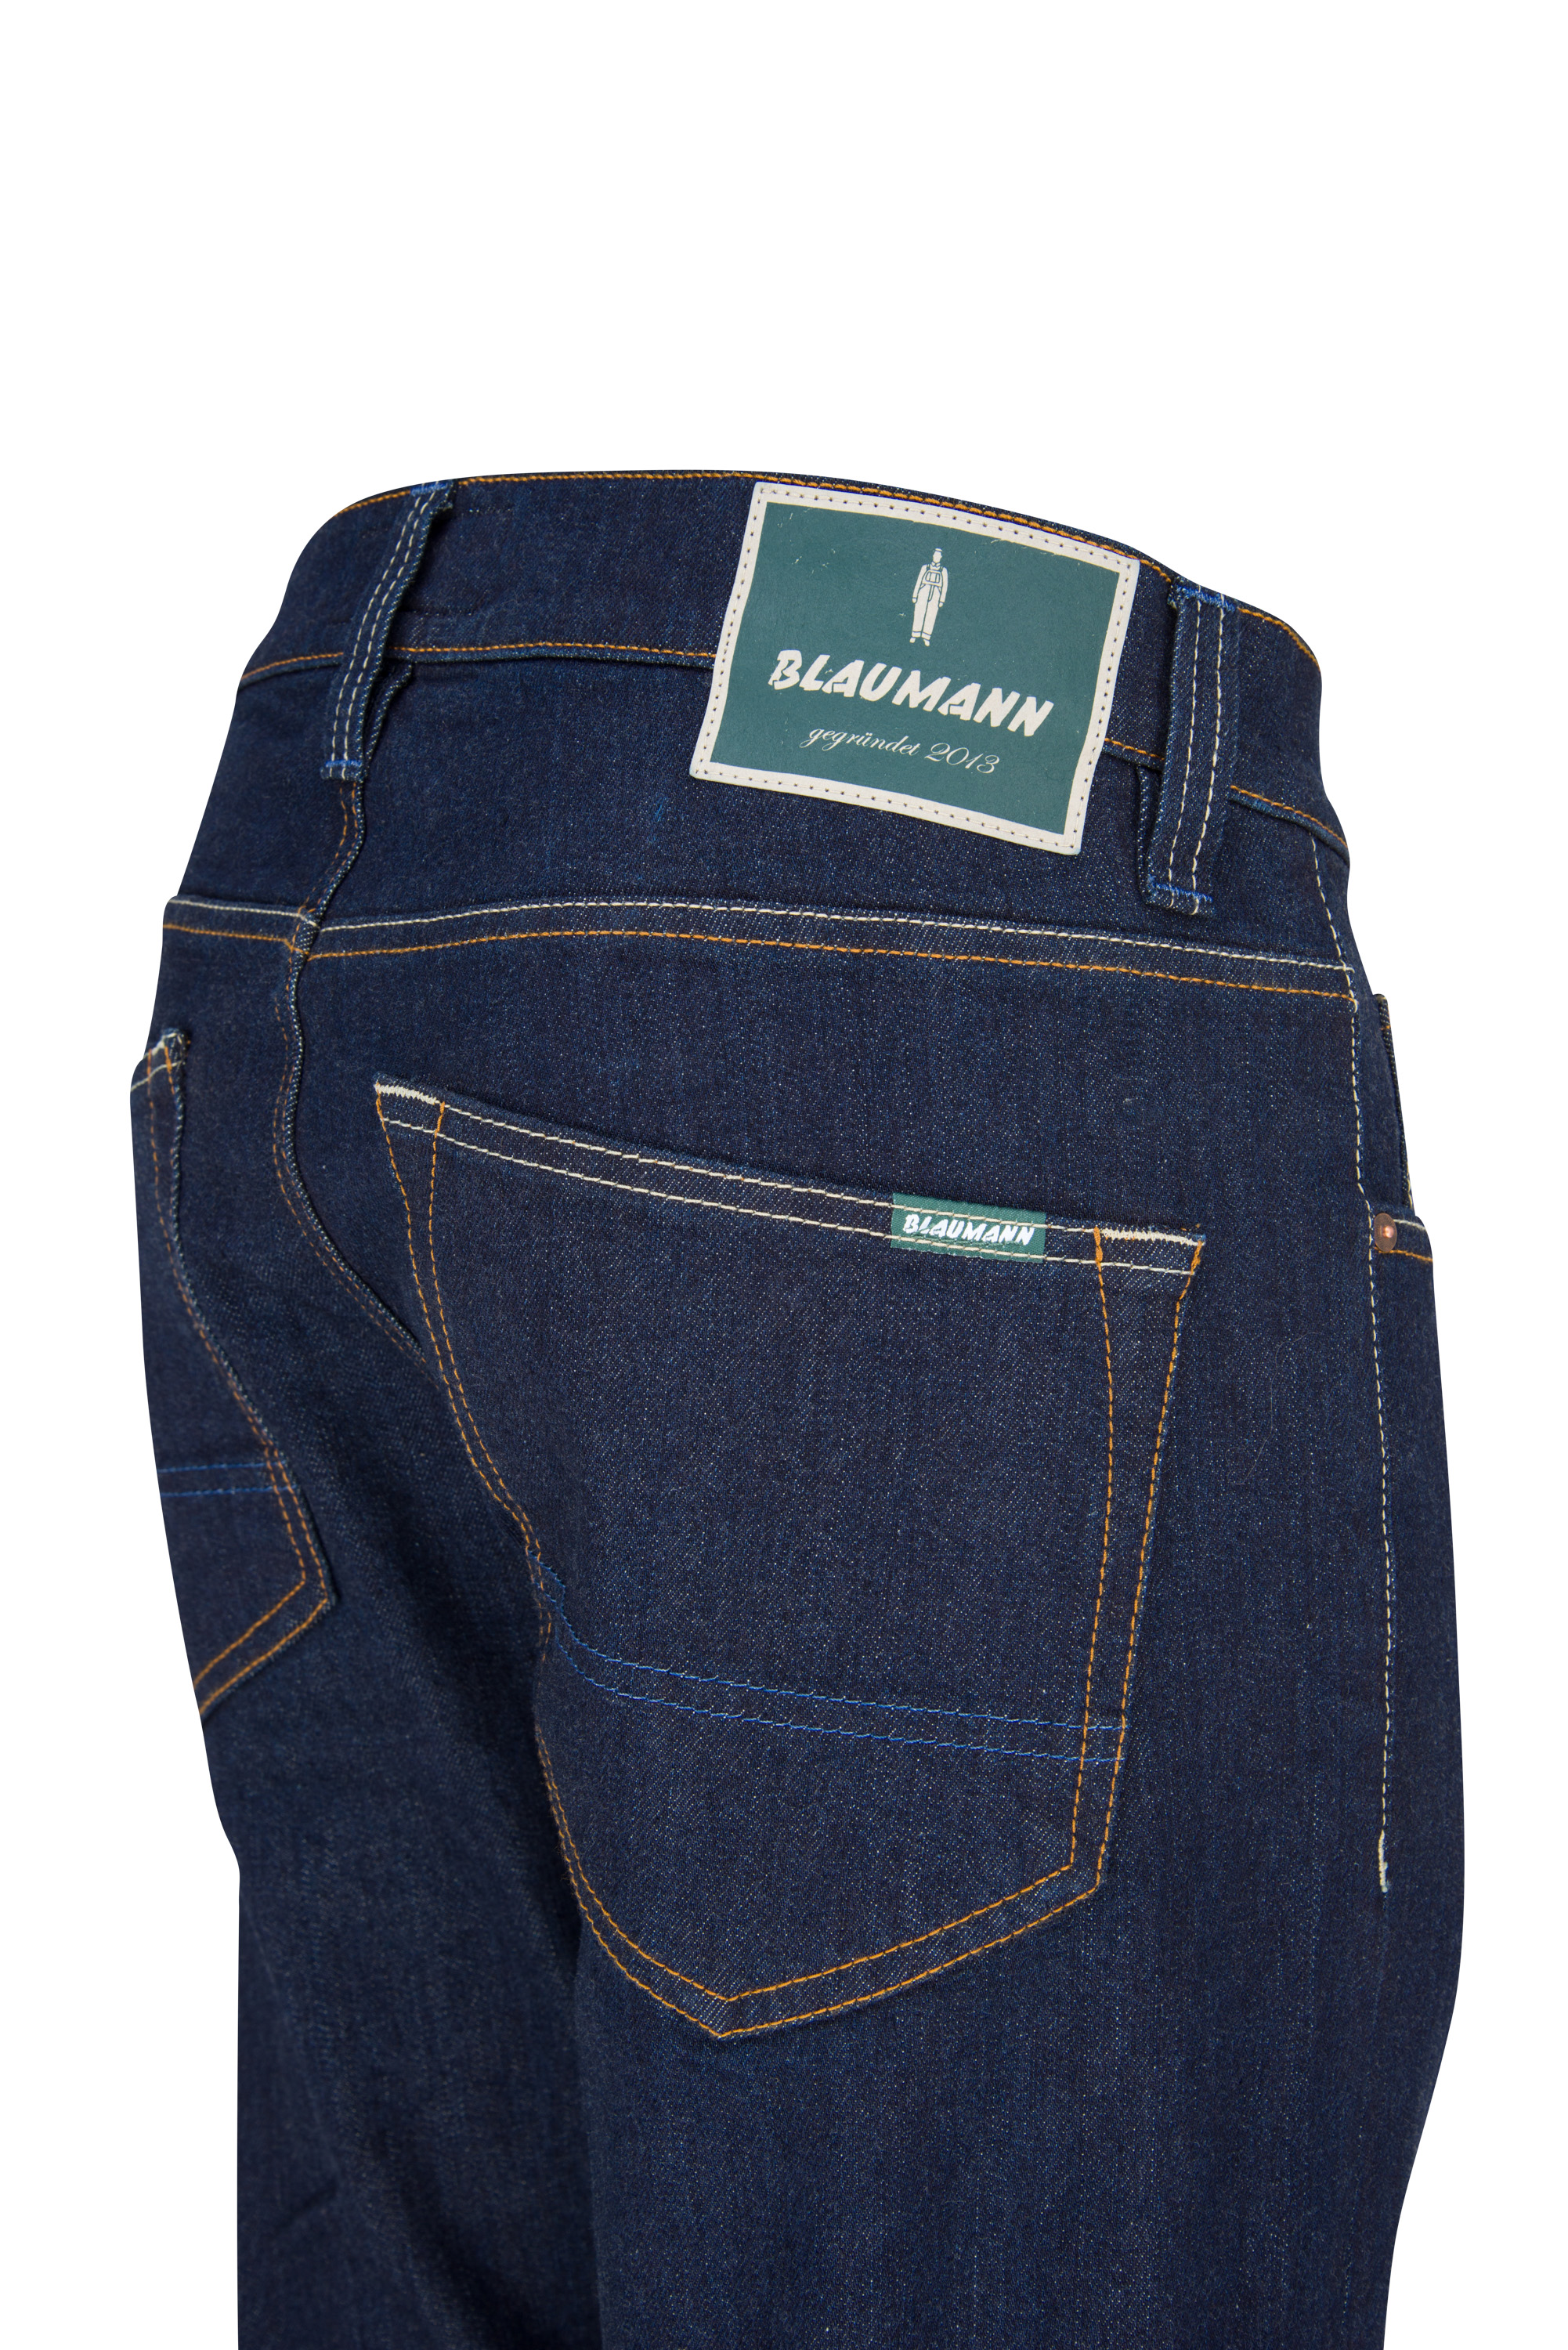 https://www.jeans-manufaktur.de/media/image/6a/8d/f4/blaumann-jeans-schmal-rinse-1003-201-468-stretch-kansas-bm1003-201-468lk7TYp0t6tuTX.jpg